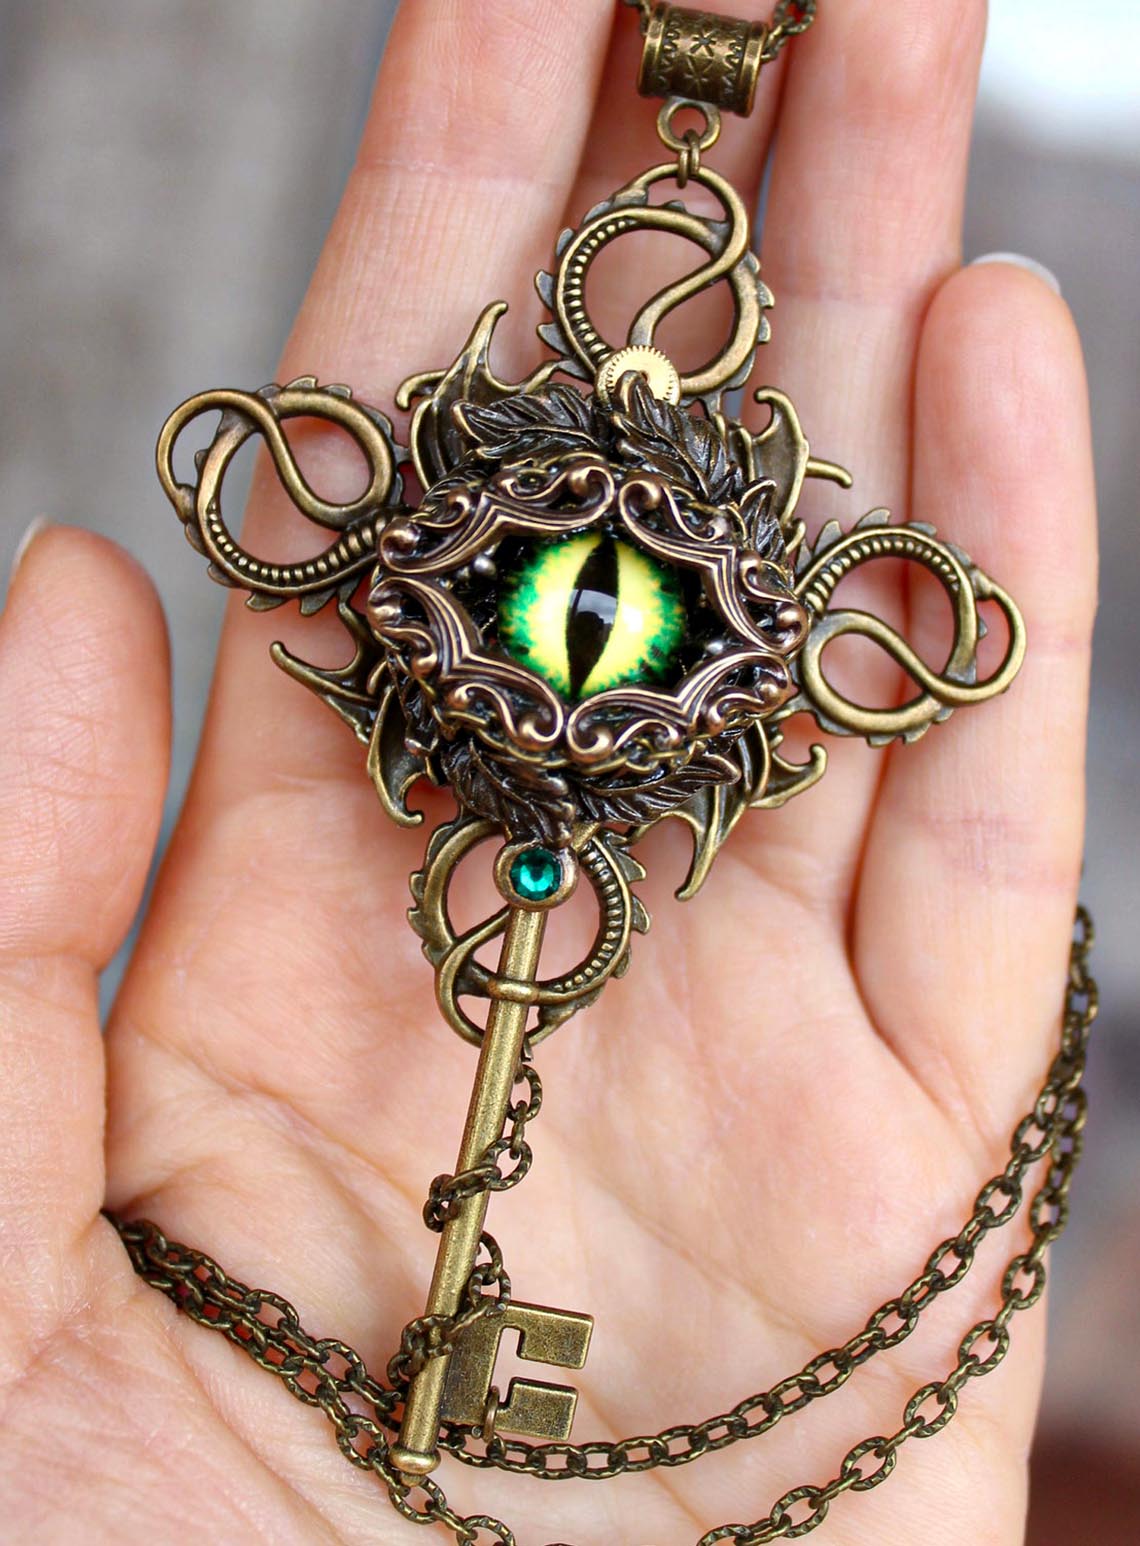 Handmade Vintage Dragon Eye Key Necklace